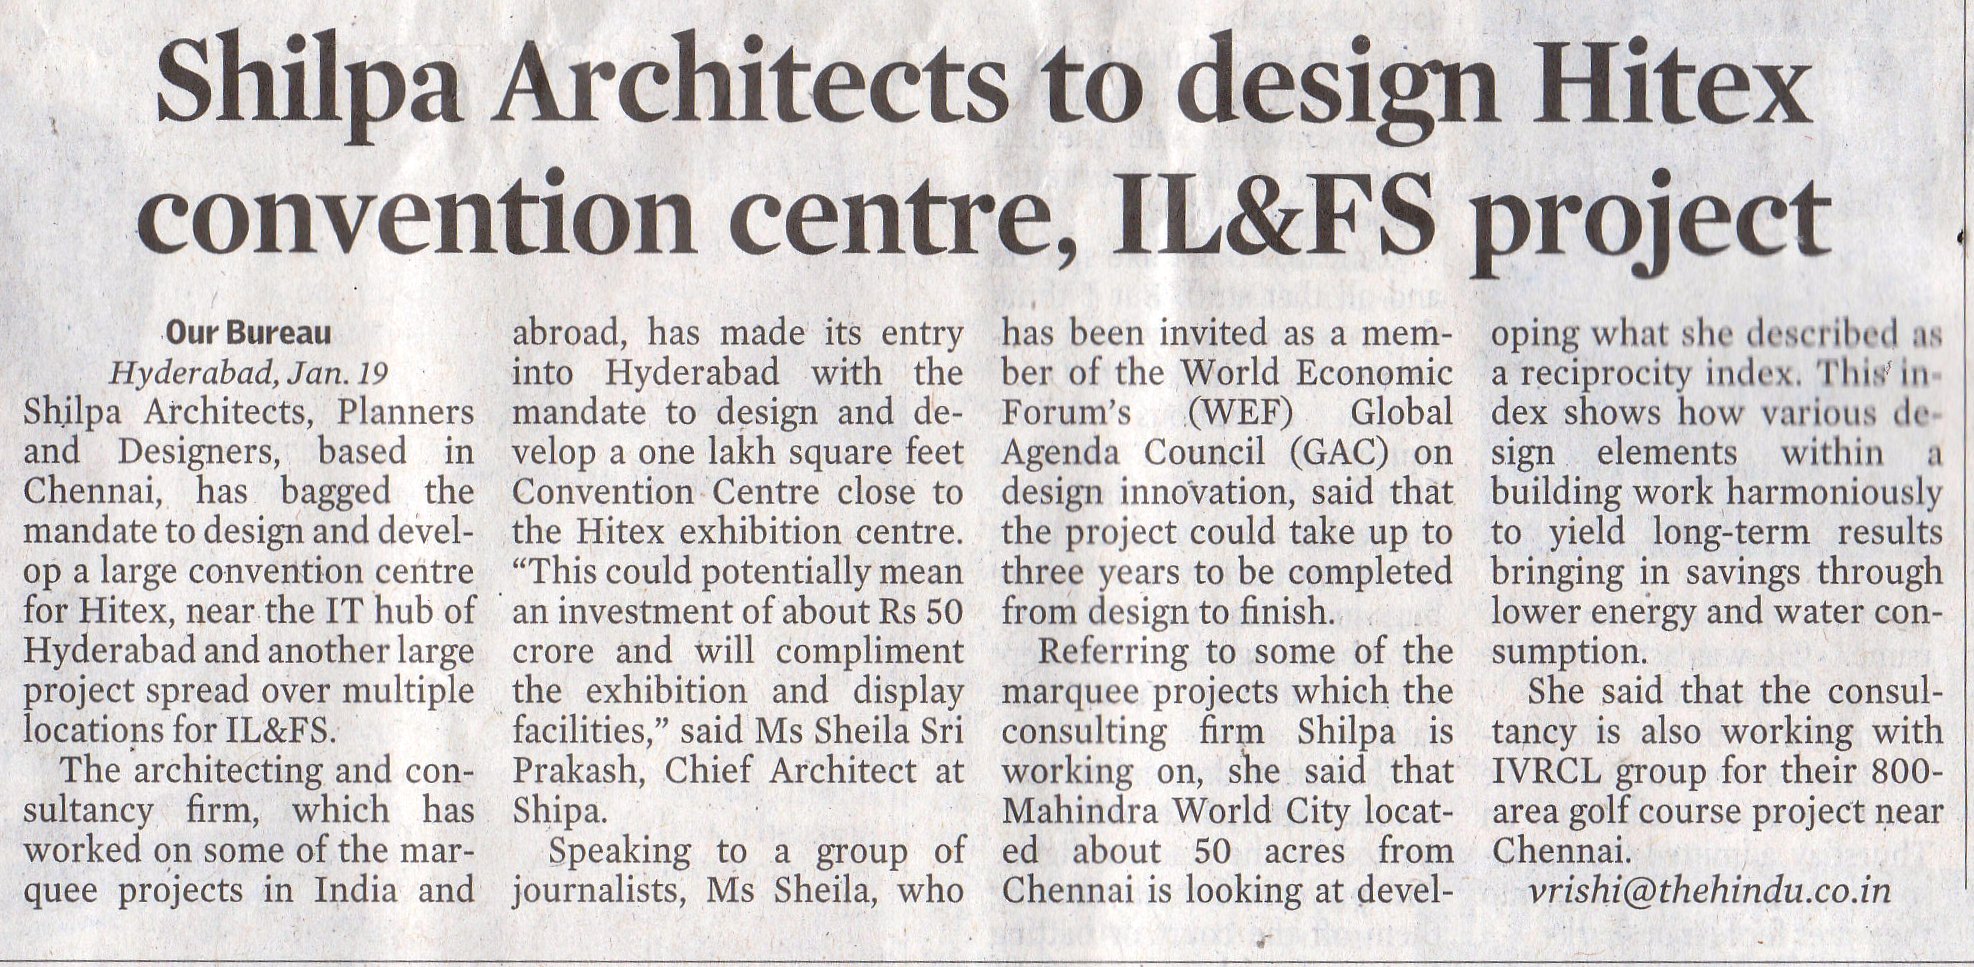 Hindu Business Line: Shilpa Architects to design Hitex convention centre, IL&FS project. 